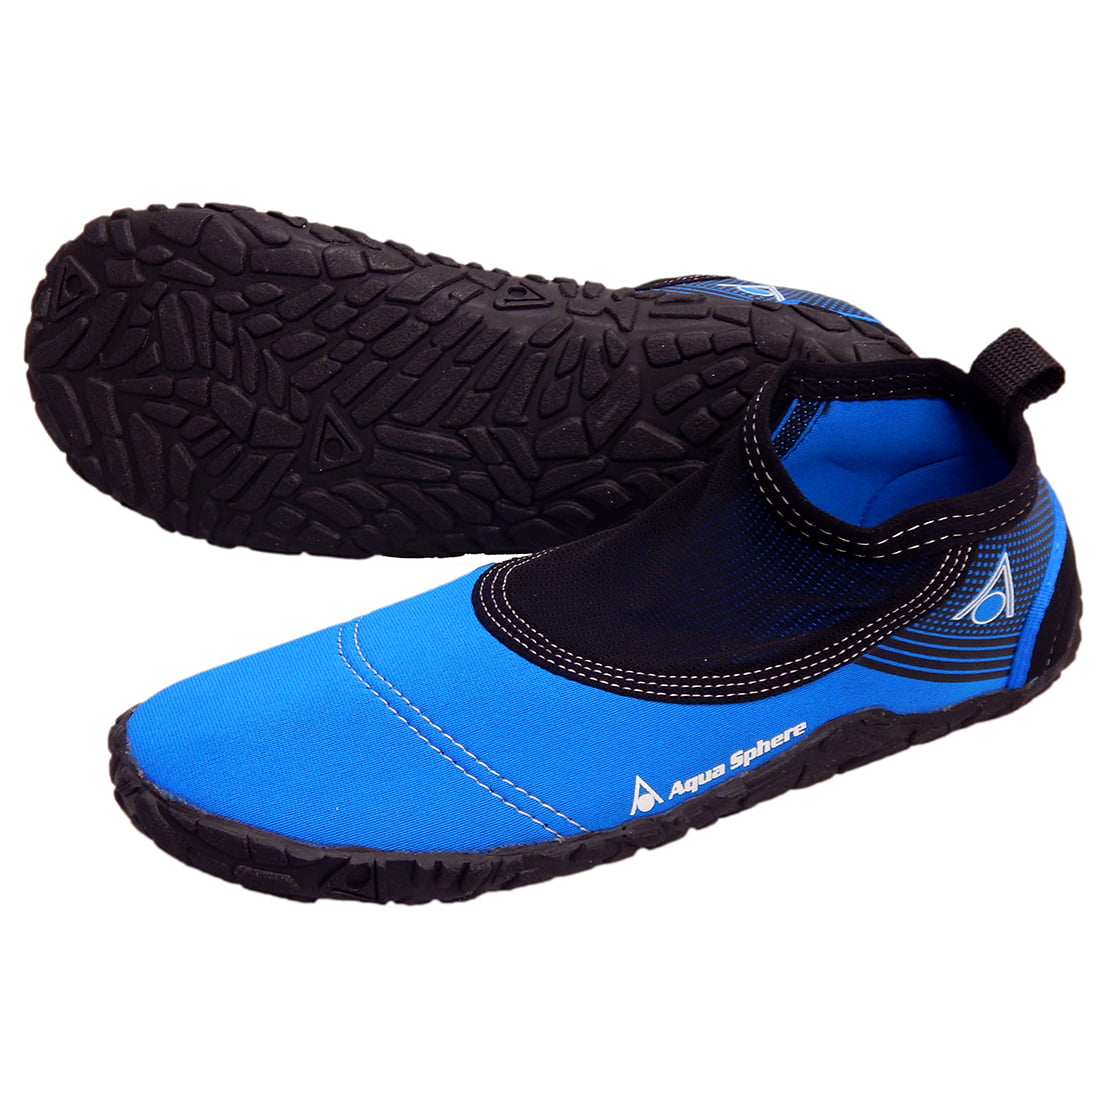 Aqua Sphere Mens Beachwalker 2.0 Blue Water Shoes, Size 9 - Walmart.com